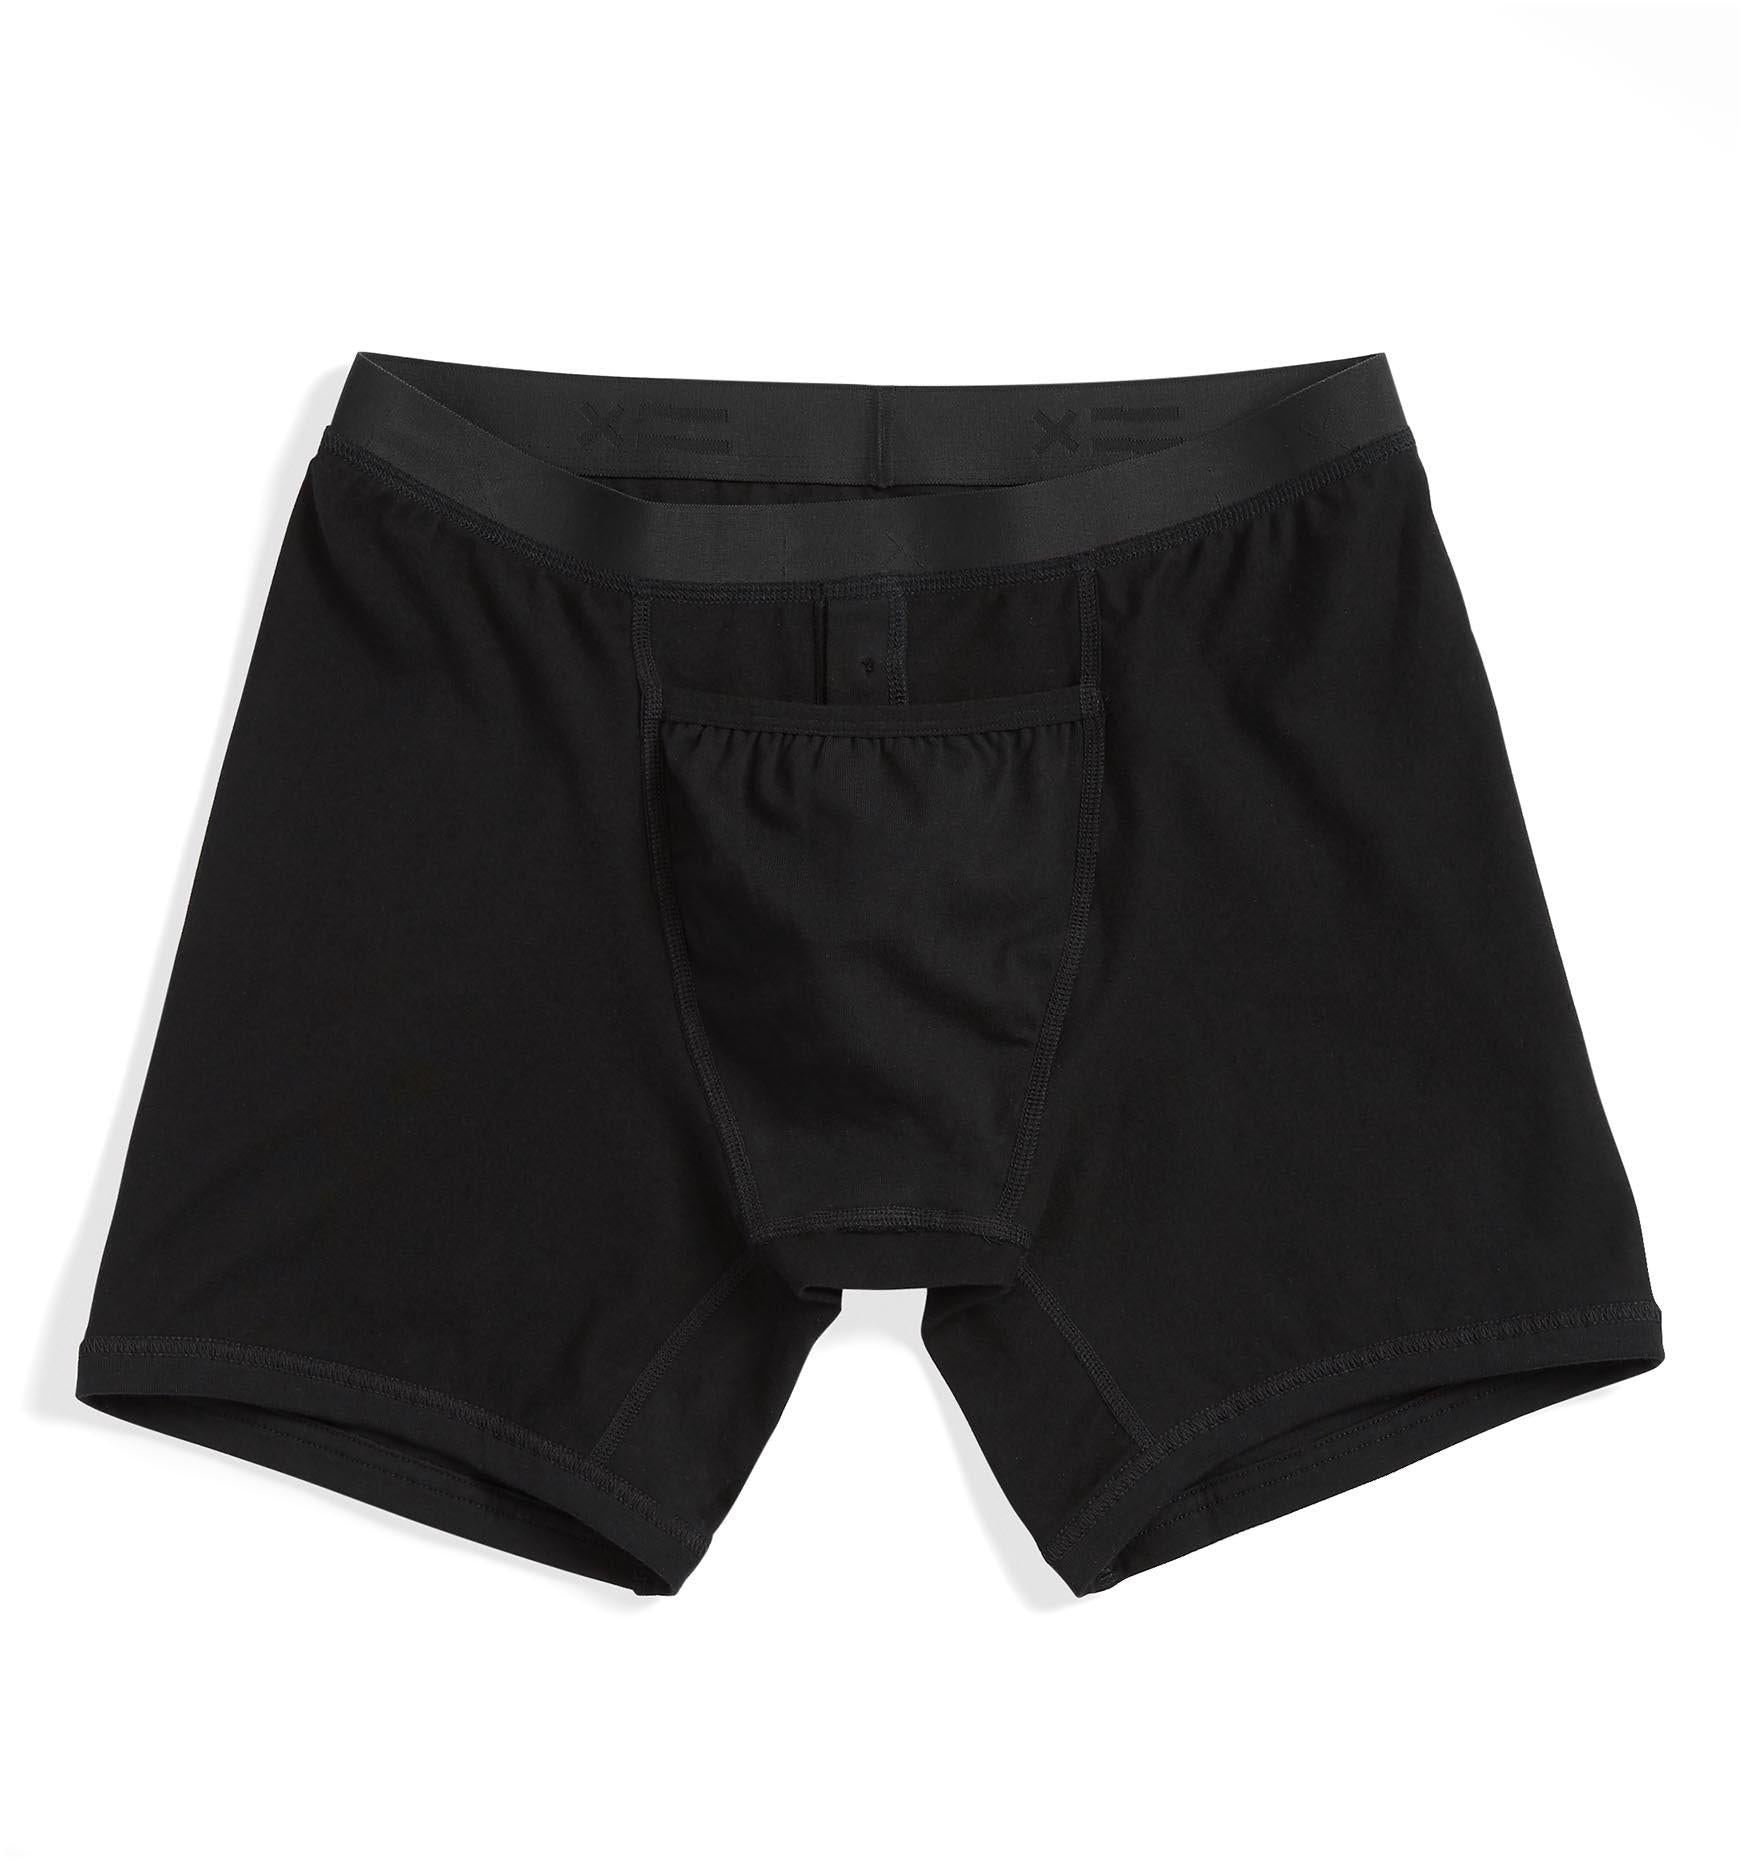 TomboyX Boy Short Underwear, Cotton Stretch Comfortable Boxer Briefs,  (XS-6X) Black Logo XXX Small